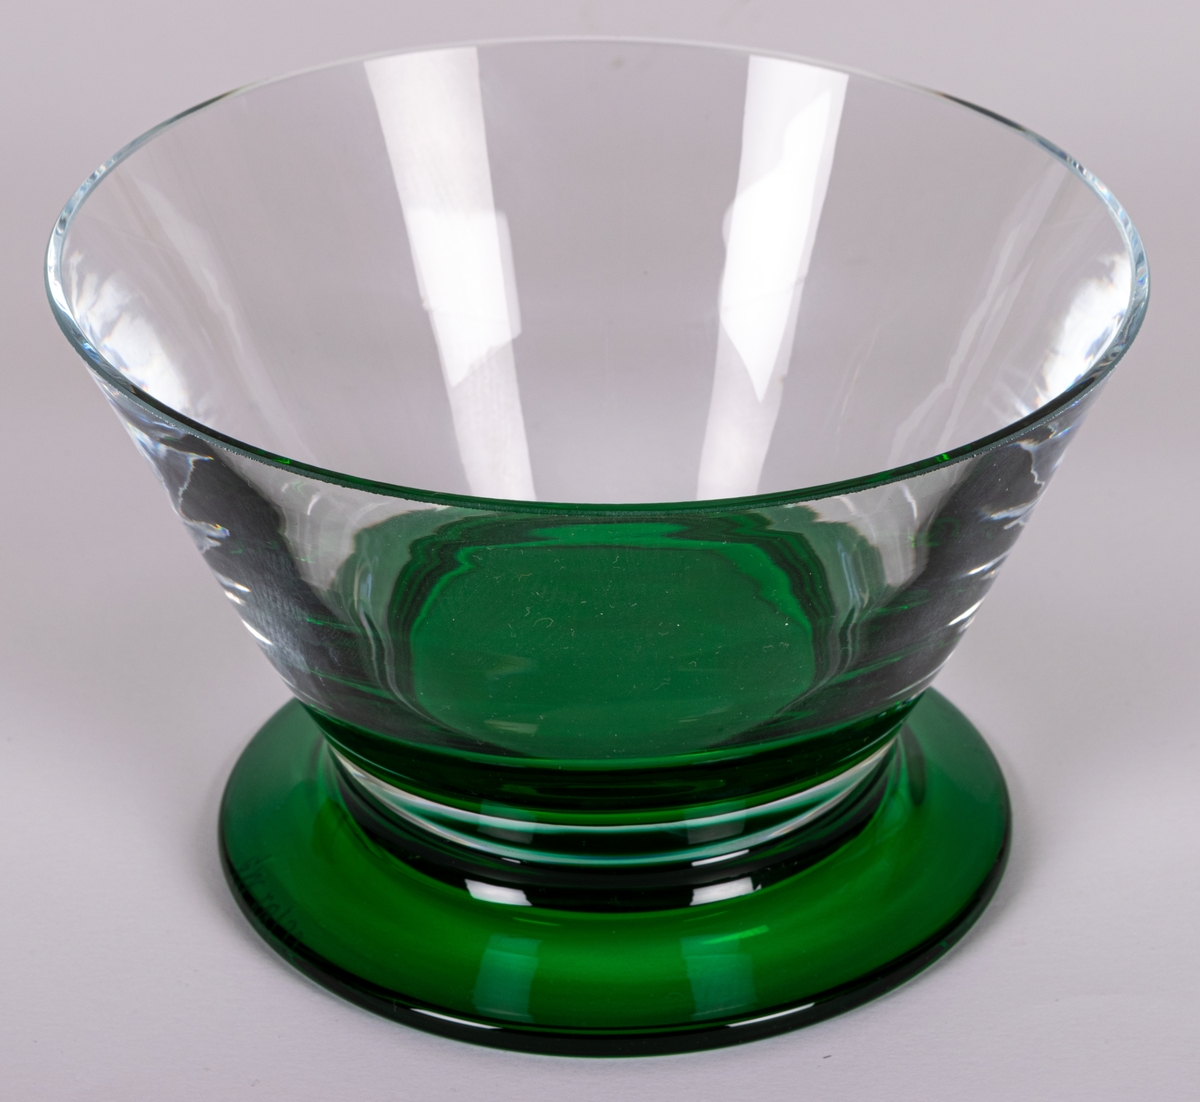 Skål. Raka, utåtlutande sidor i ofärgat glas på låg, utkragad fot i grönt glas. Design Gunnar Cyrén för Orrefors Glasbruk.